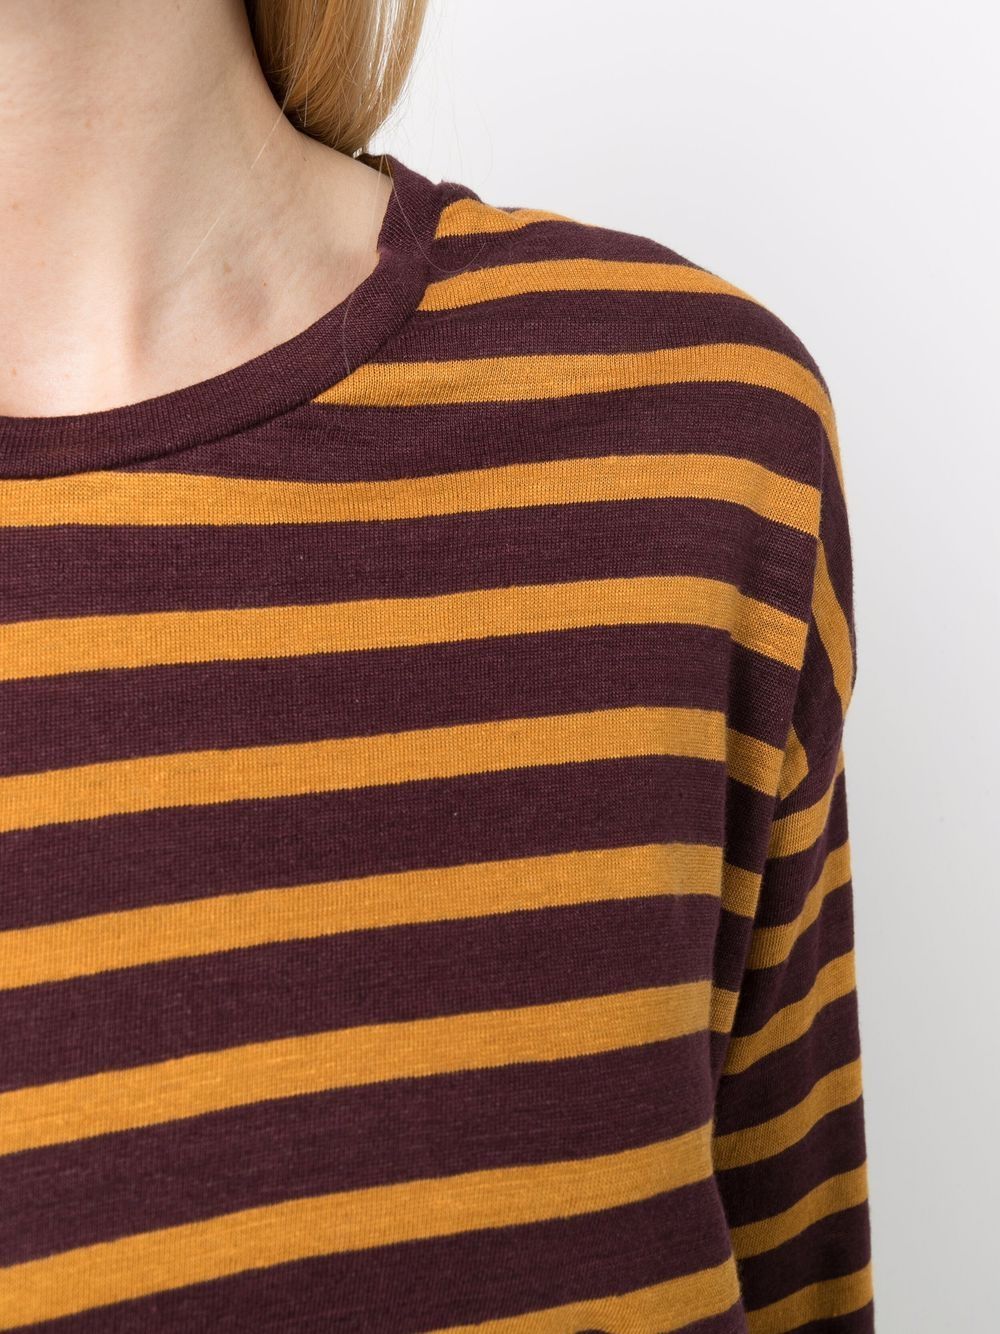 PaulaLinen Striped Long Sleeved T-Shirt at Fashion Clinic